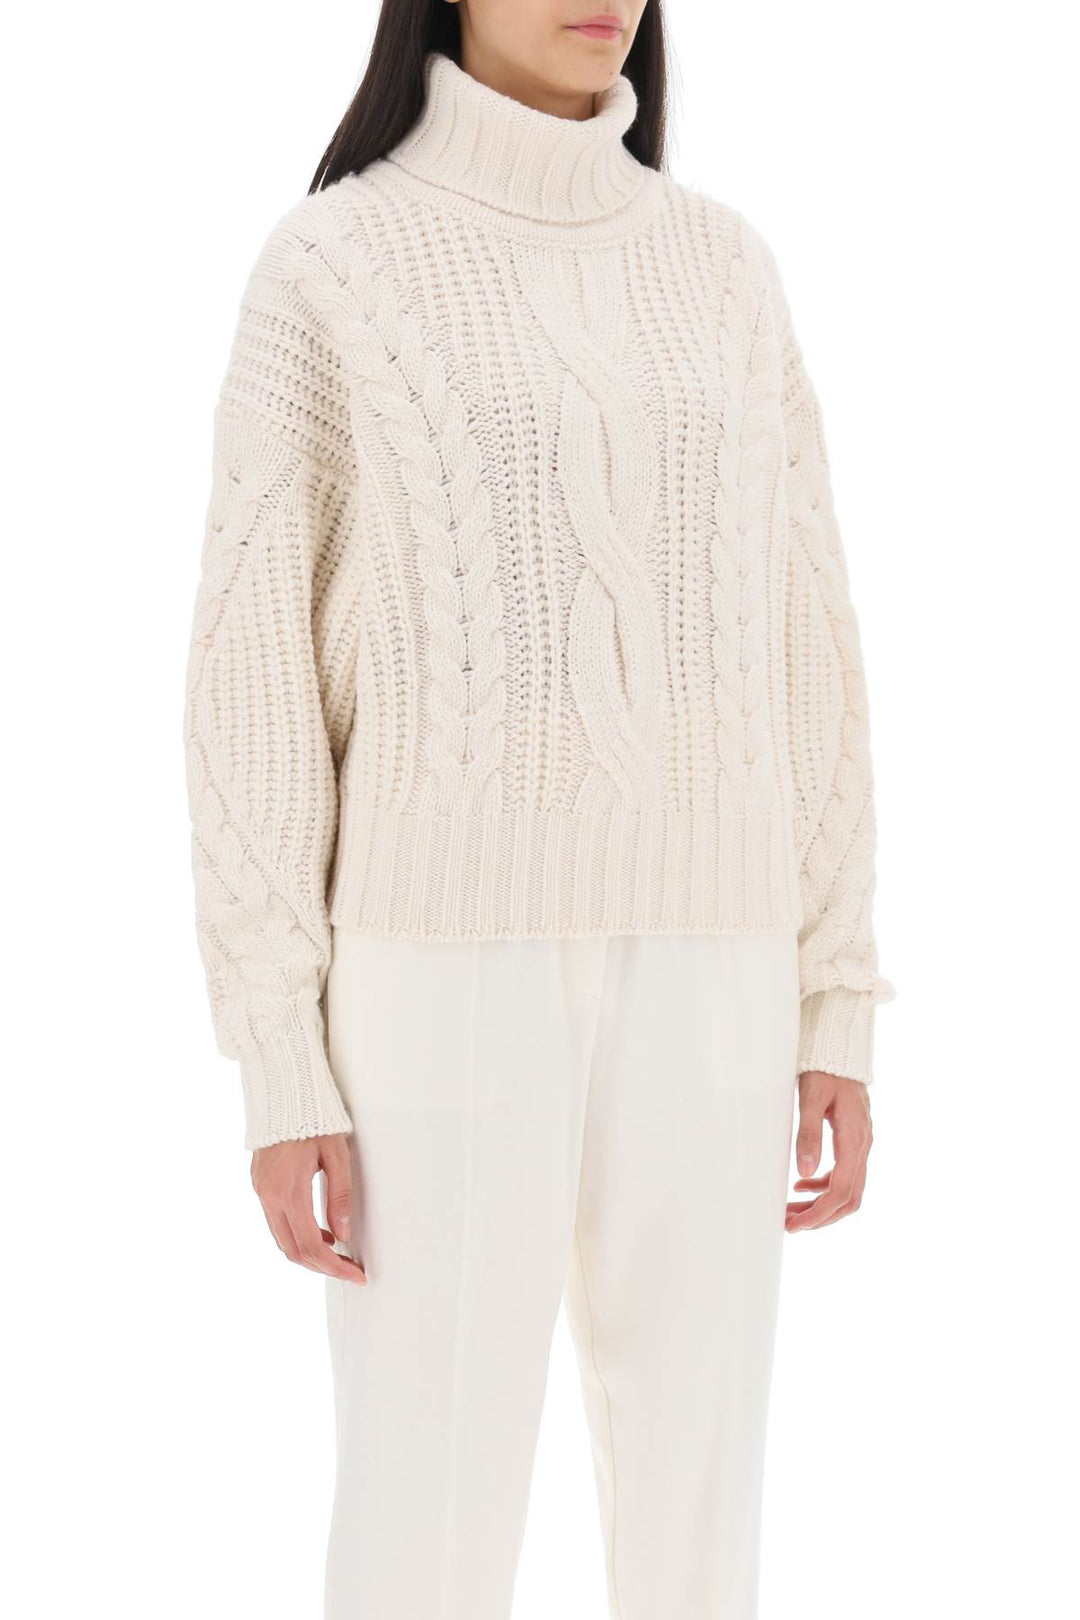 Mvp Wardrobe Visconti Cable Knit Sweater   Bianco